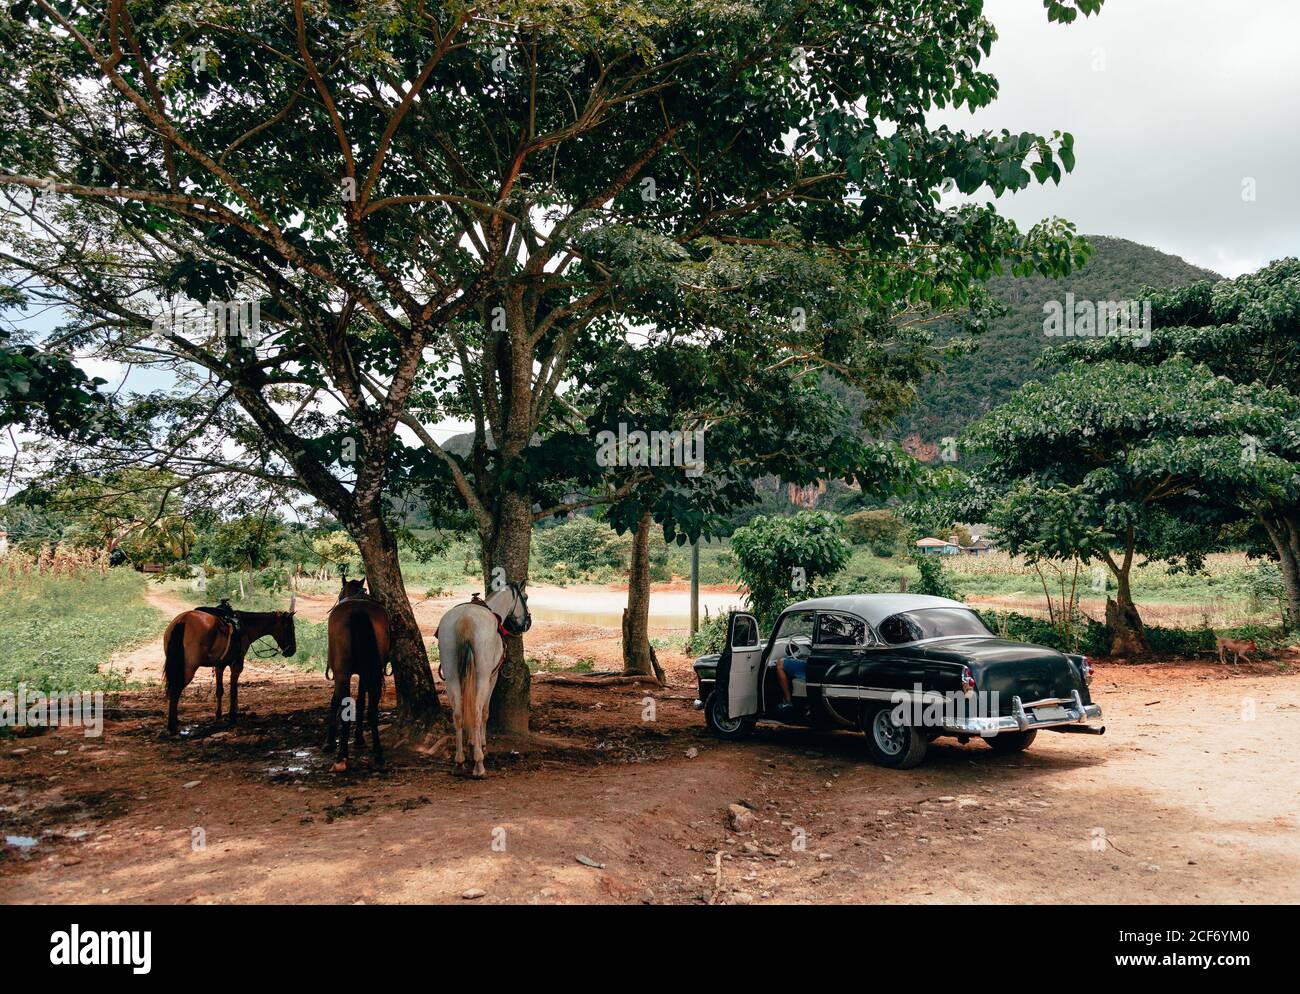 Stylish vintage black car near horses under big green tree on sandy roadside among plants in Cuba Stock Photo